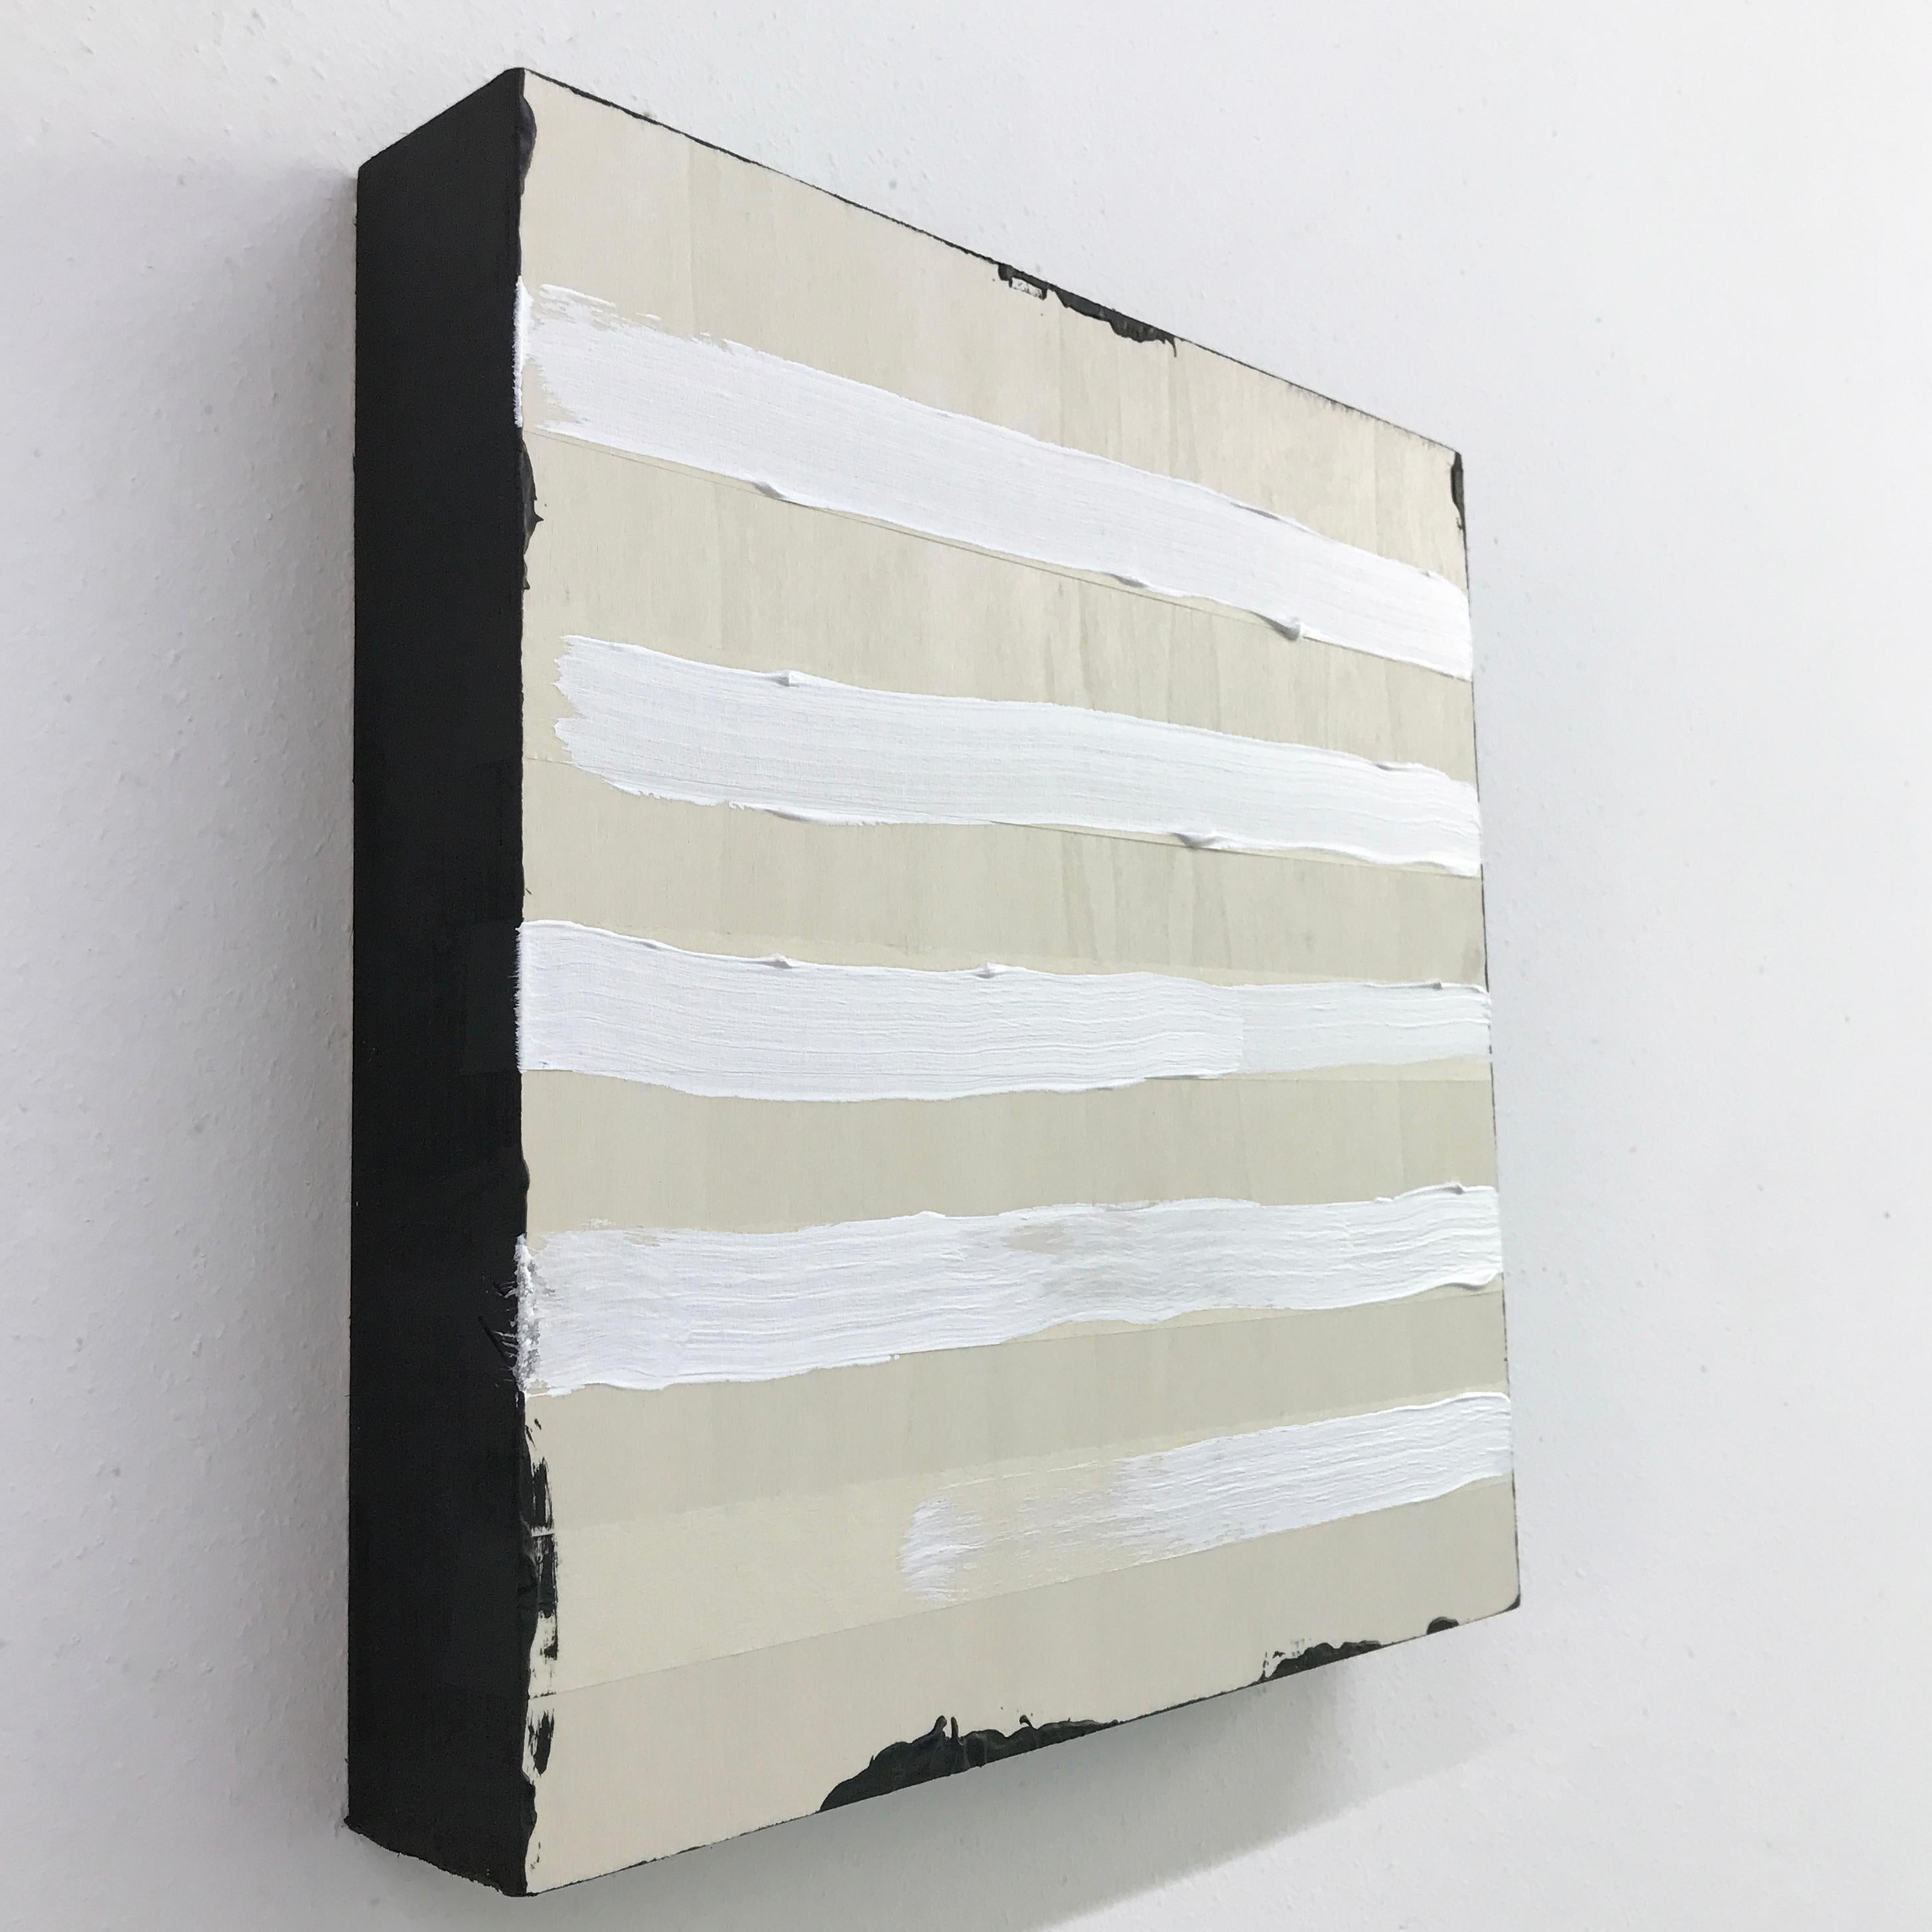 Circle Painting  - acrylic & mixed media on wood, 2019
12 x 12